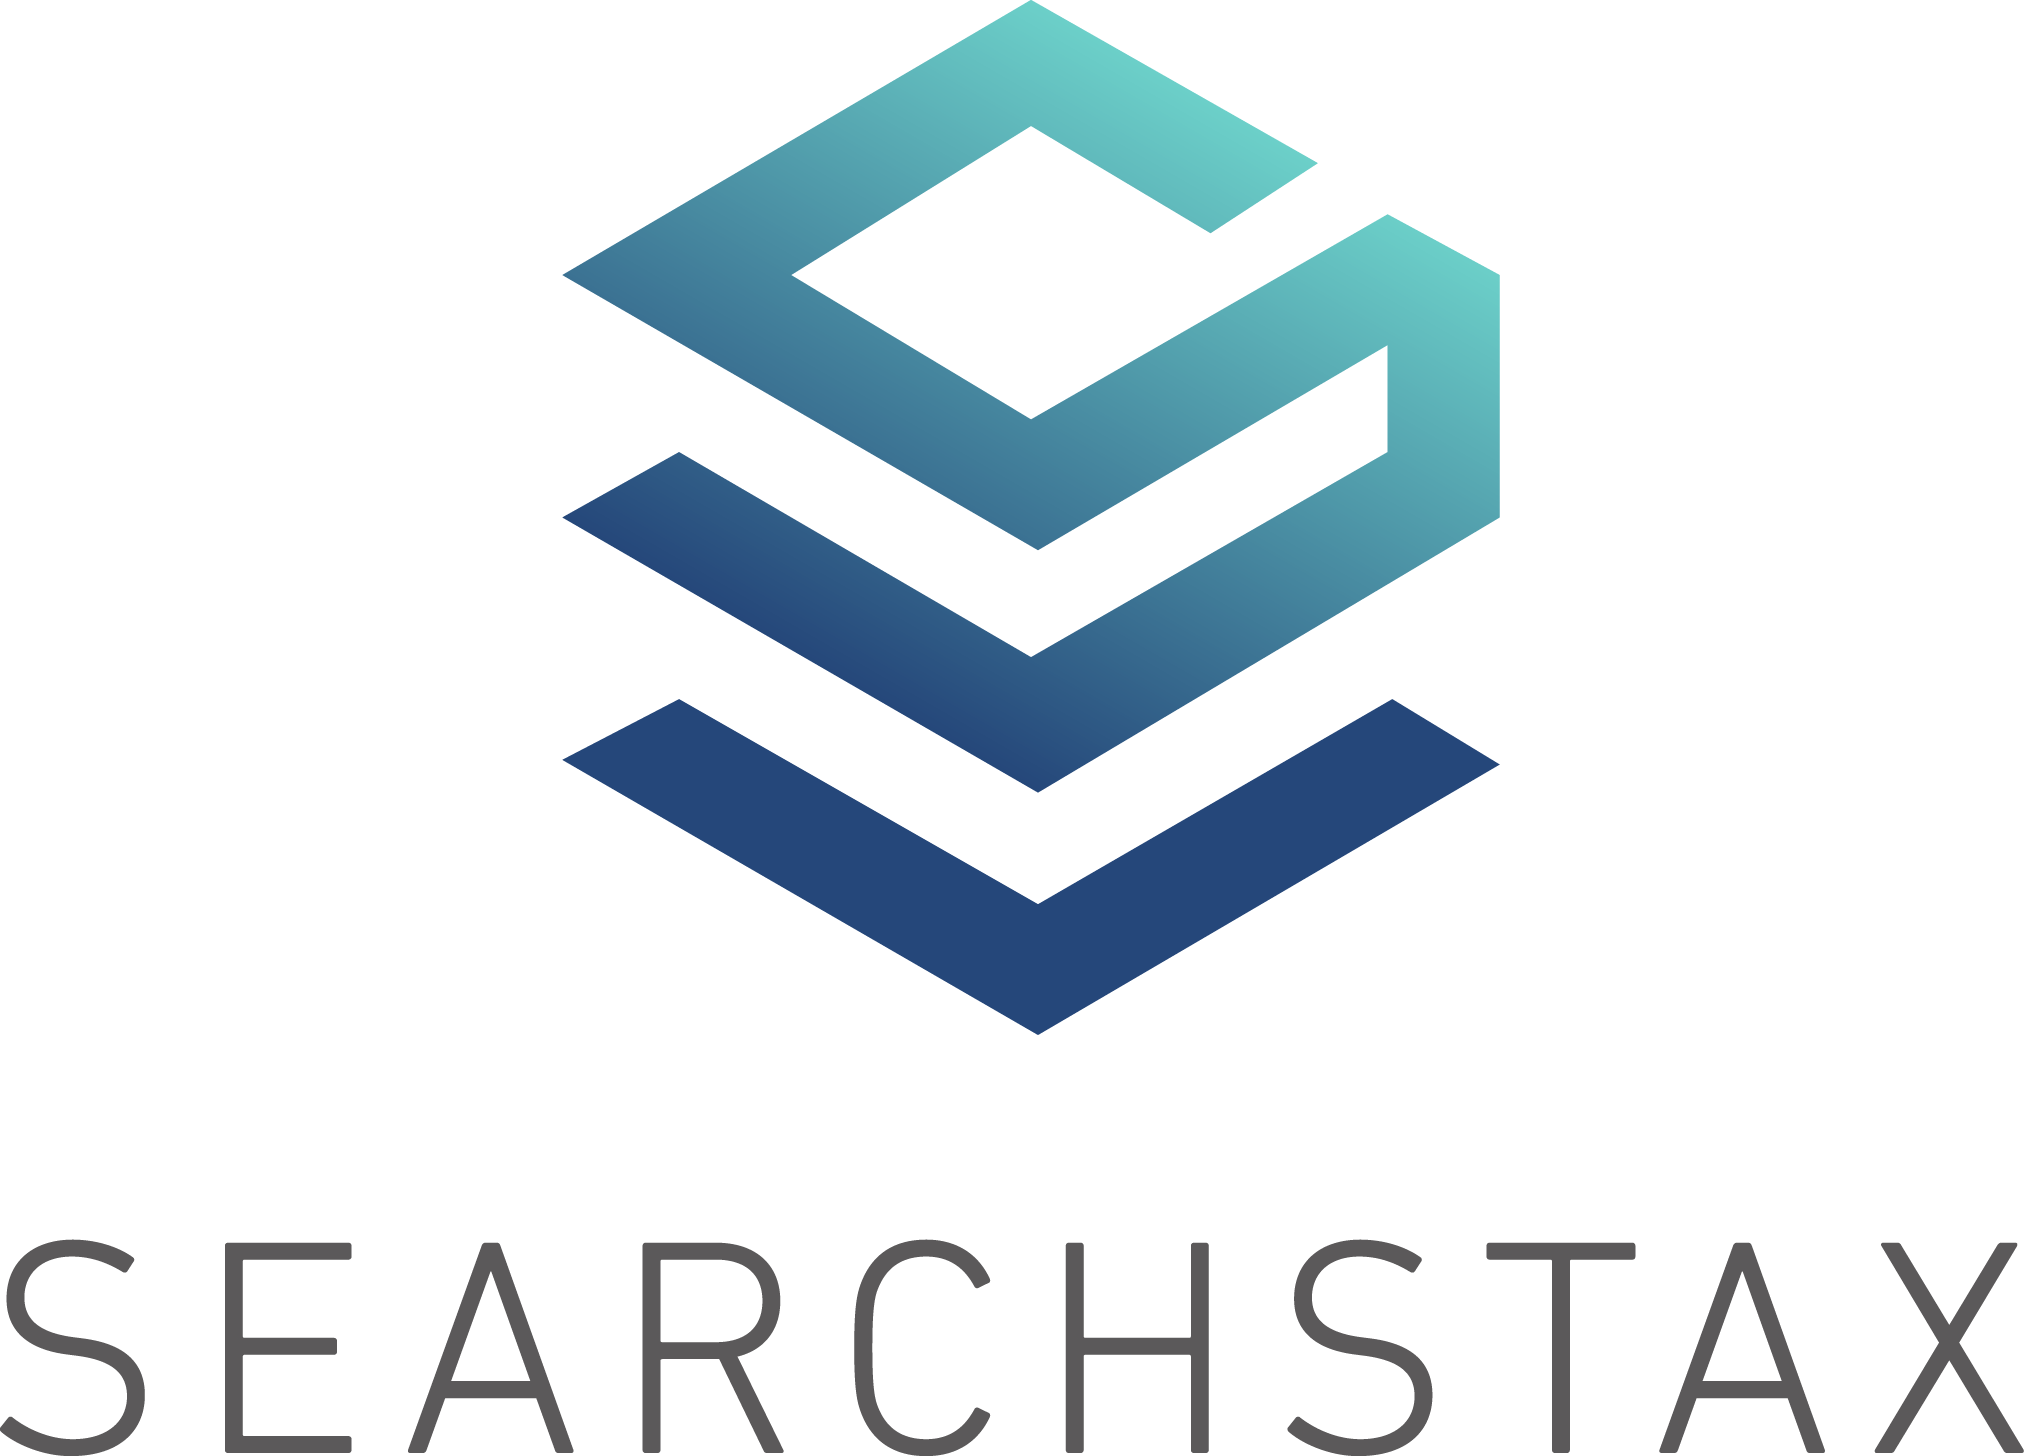 Searchstax Logo